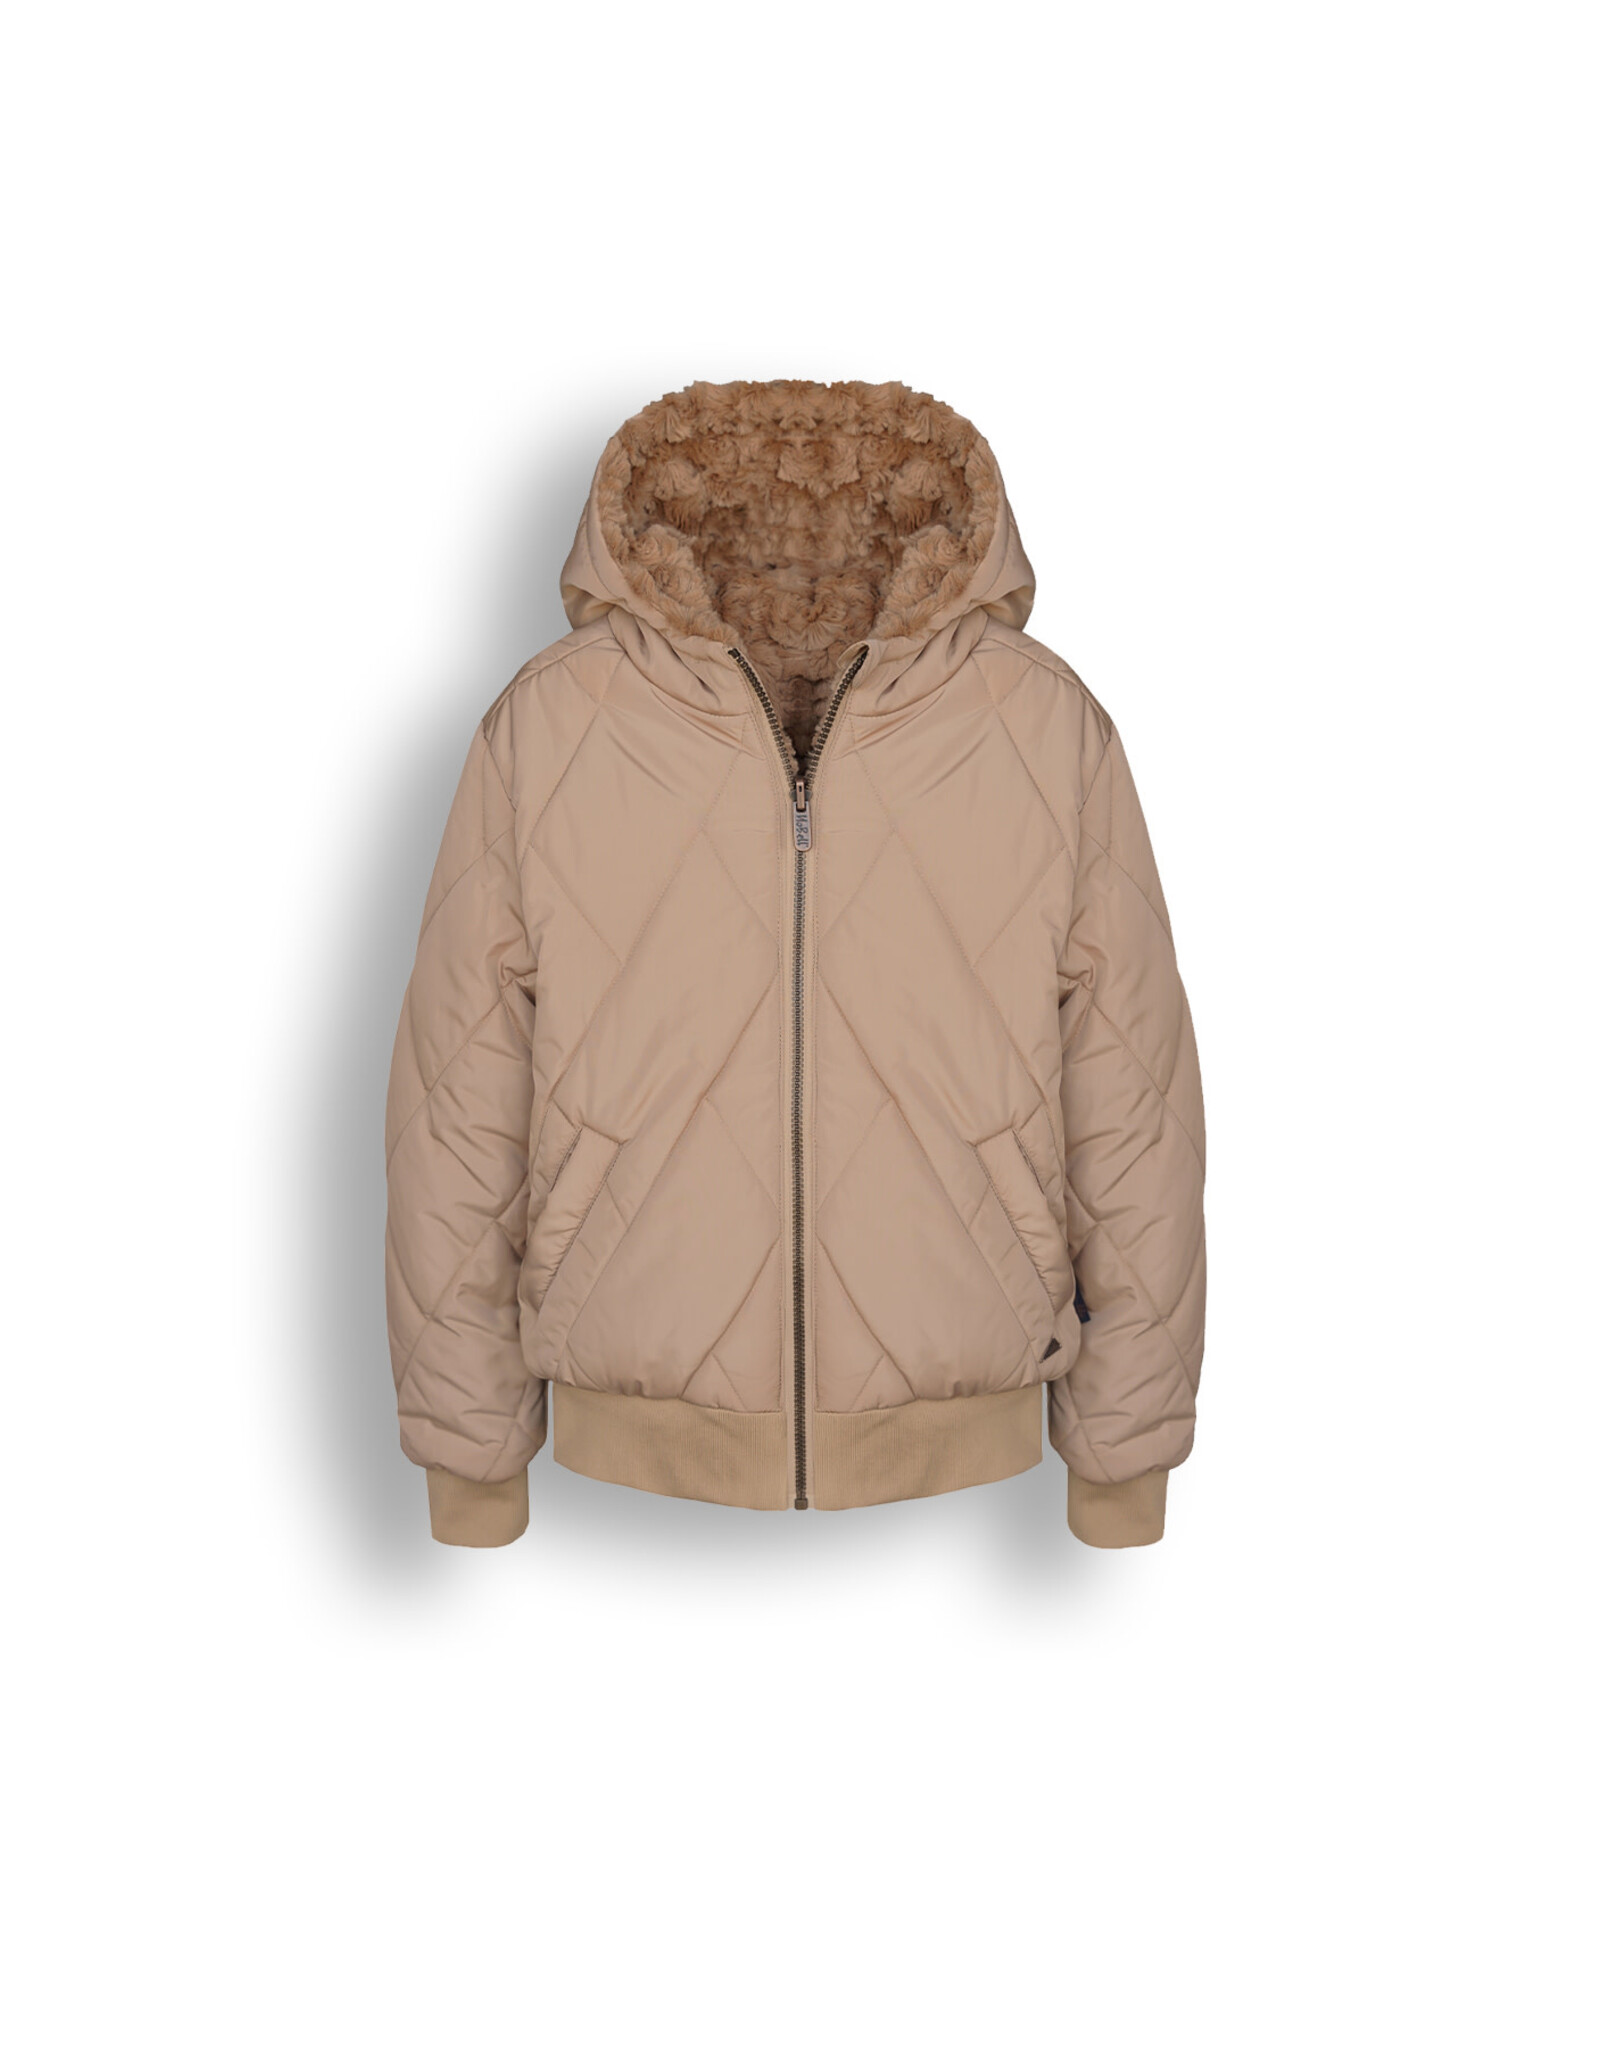 Nobell NoBell' Bye Revirseble hooded jacket with fur Beige Sand